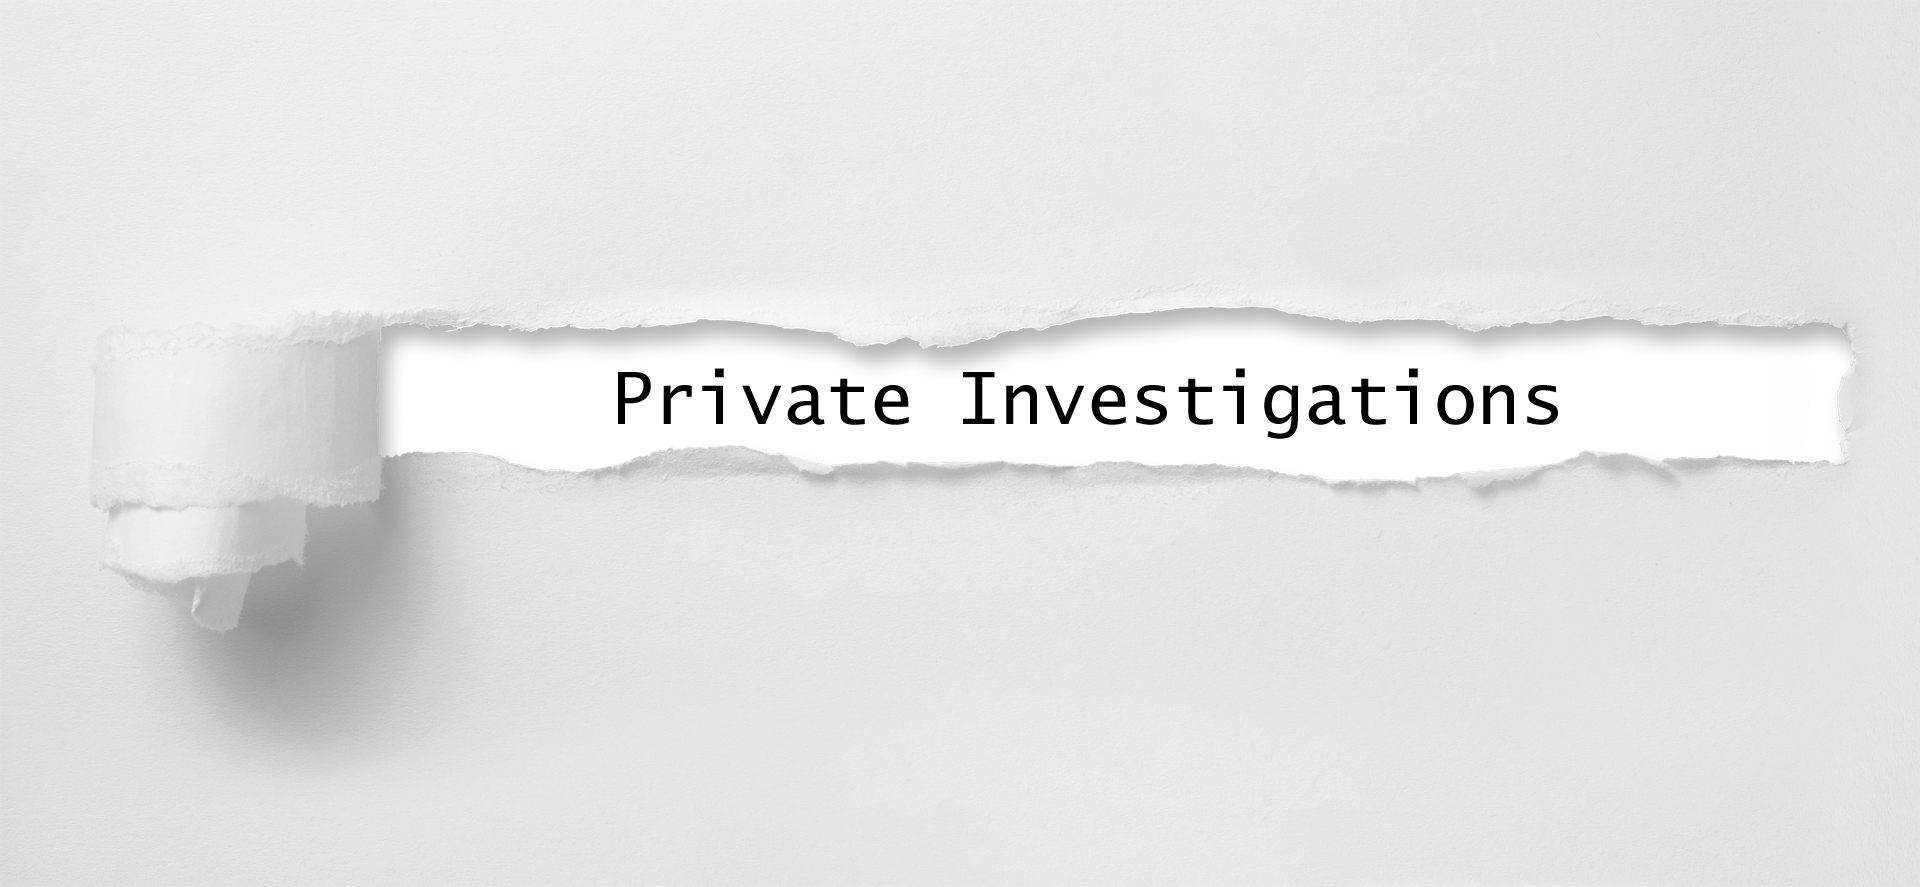 Top 5 Requests Private Investigators Can't Legally Fulfill